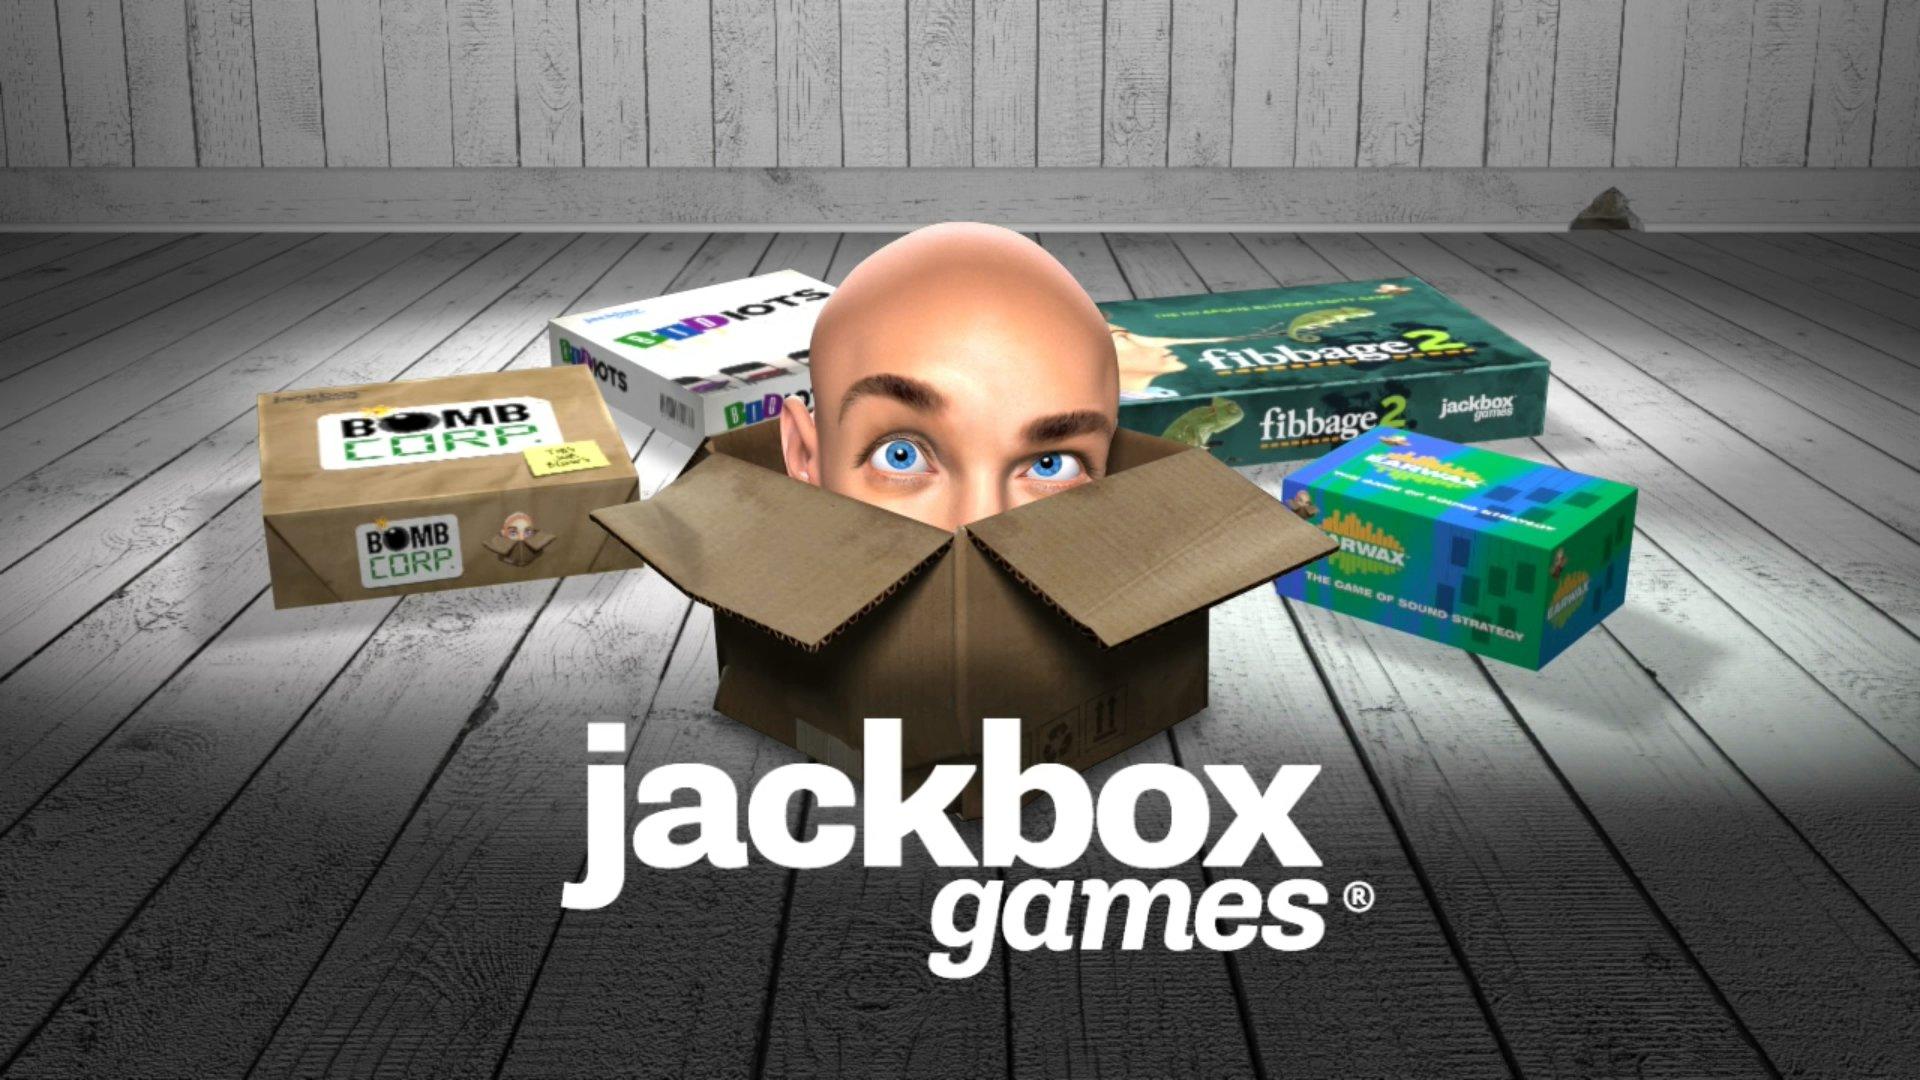 the jackbox party pack 2 bididiot